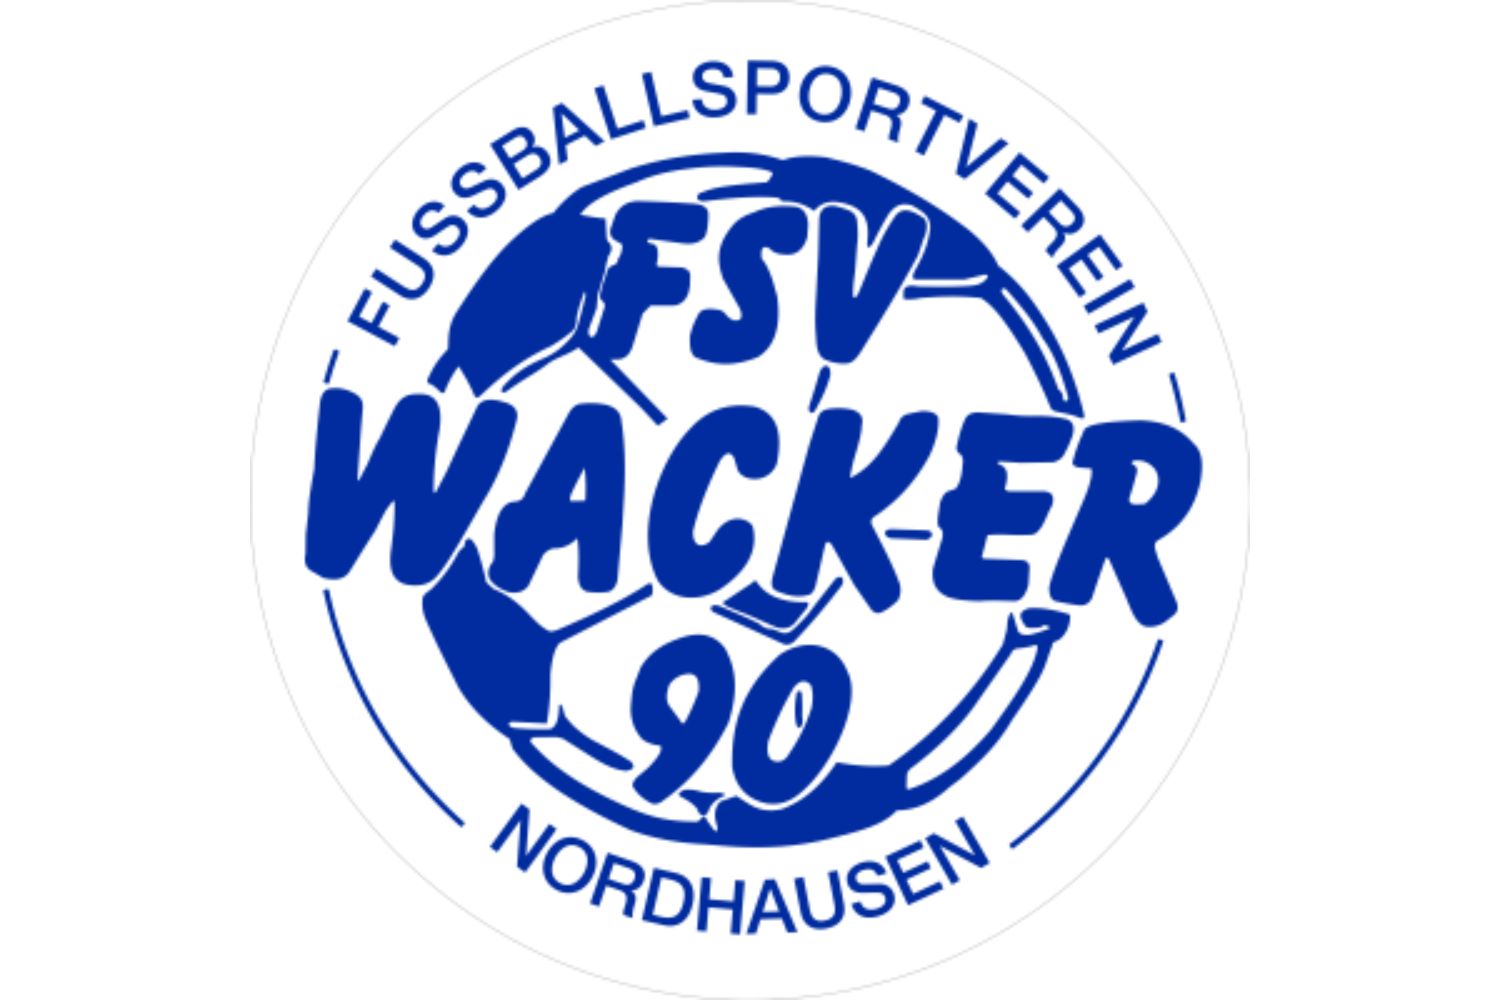 fsv-wacker-90-nordhausen-11-football-club-facts